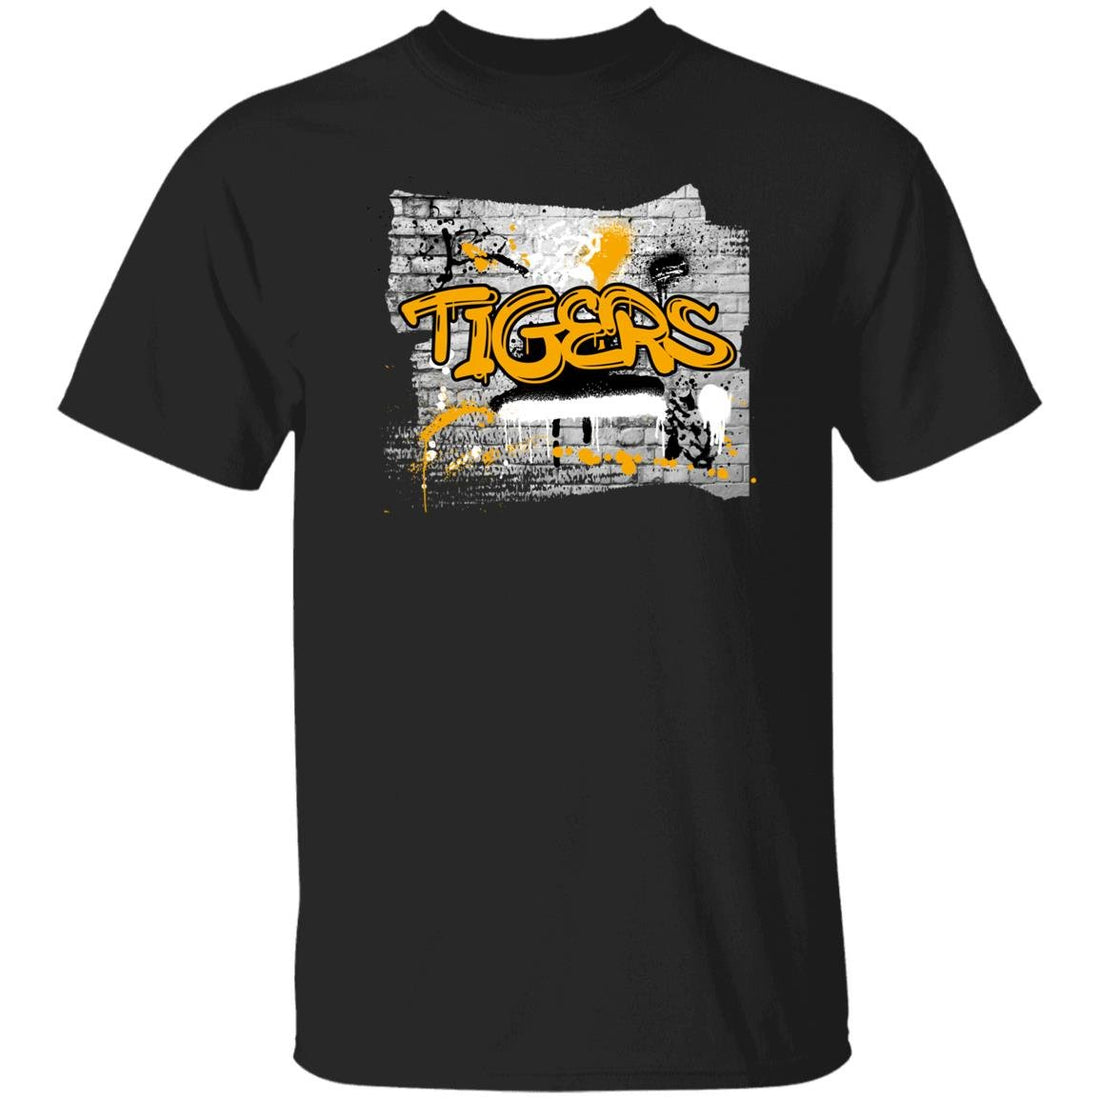 Tigers Graffiti T-Shirt - T-Shirts - Positively Sassy - Tigers Graffiti T-Shirt